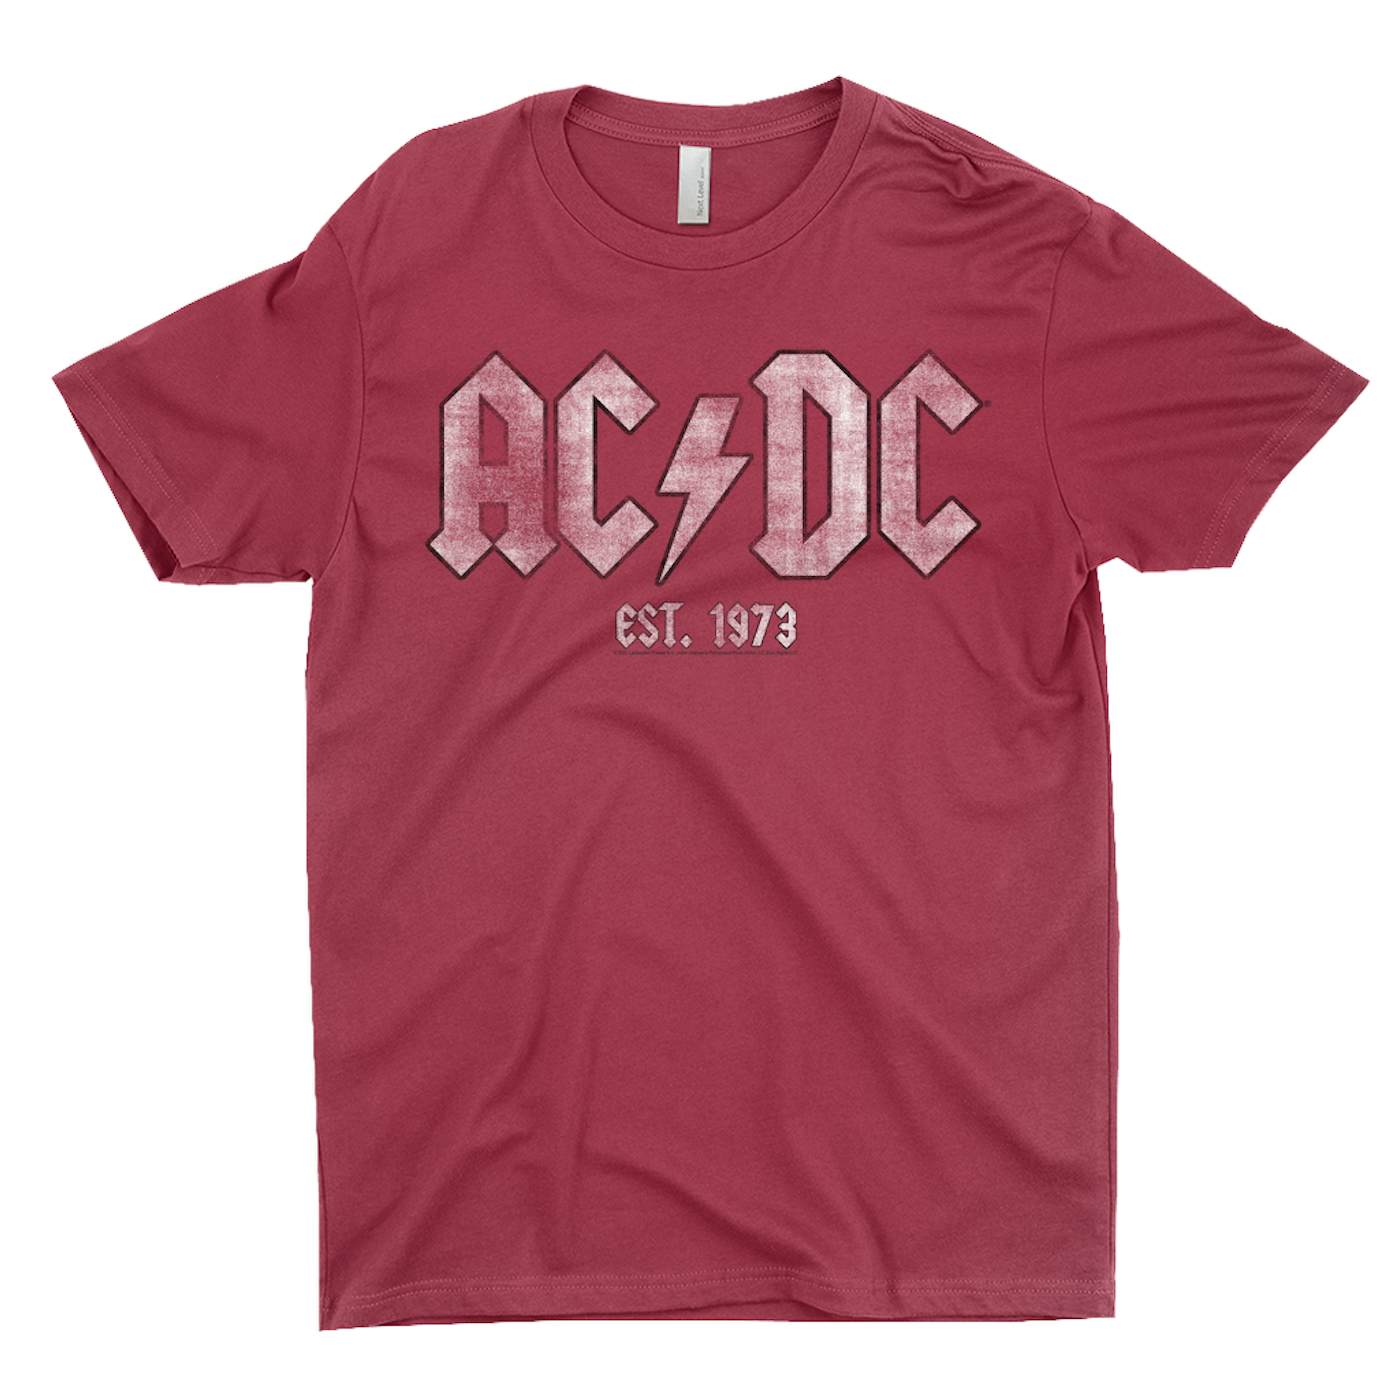 ACDC T-Shirt | AC/DC Est. 1973 Distressed ACDC Shirt (Merchbar Exclusive)